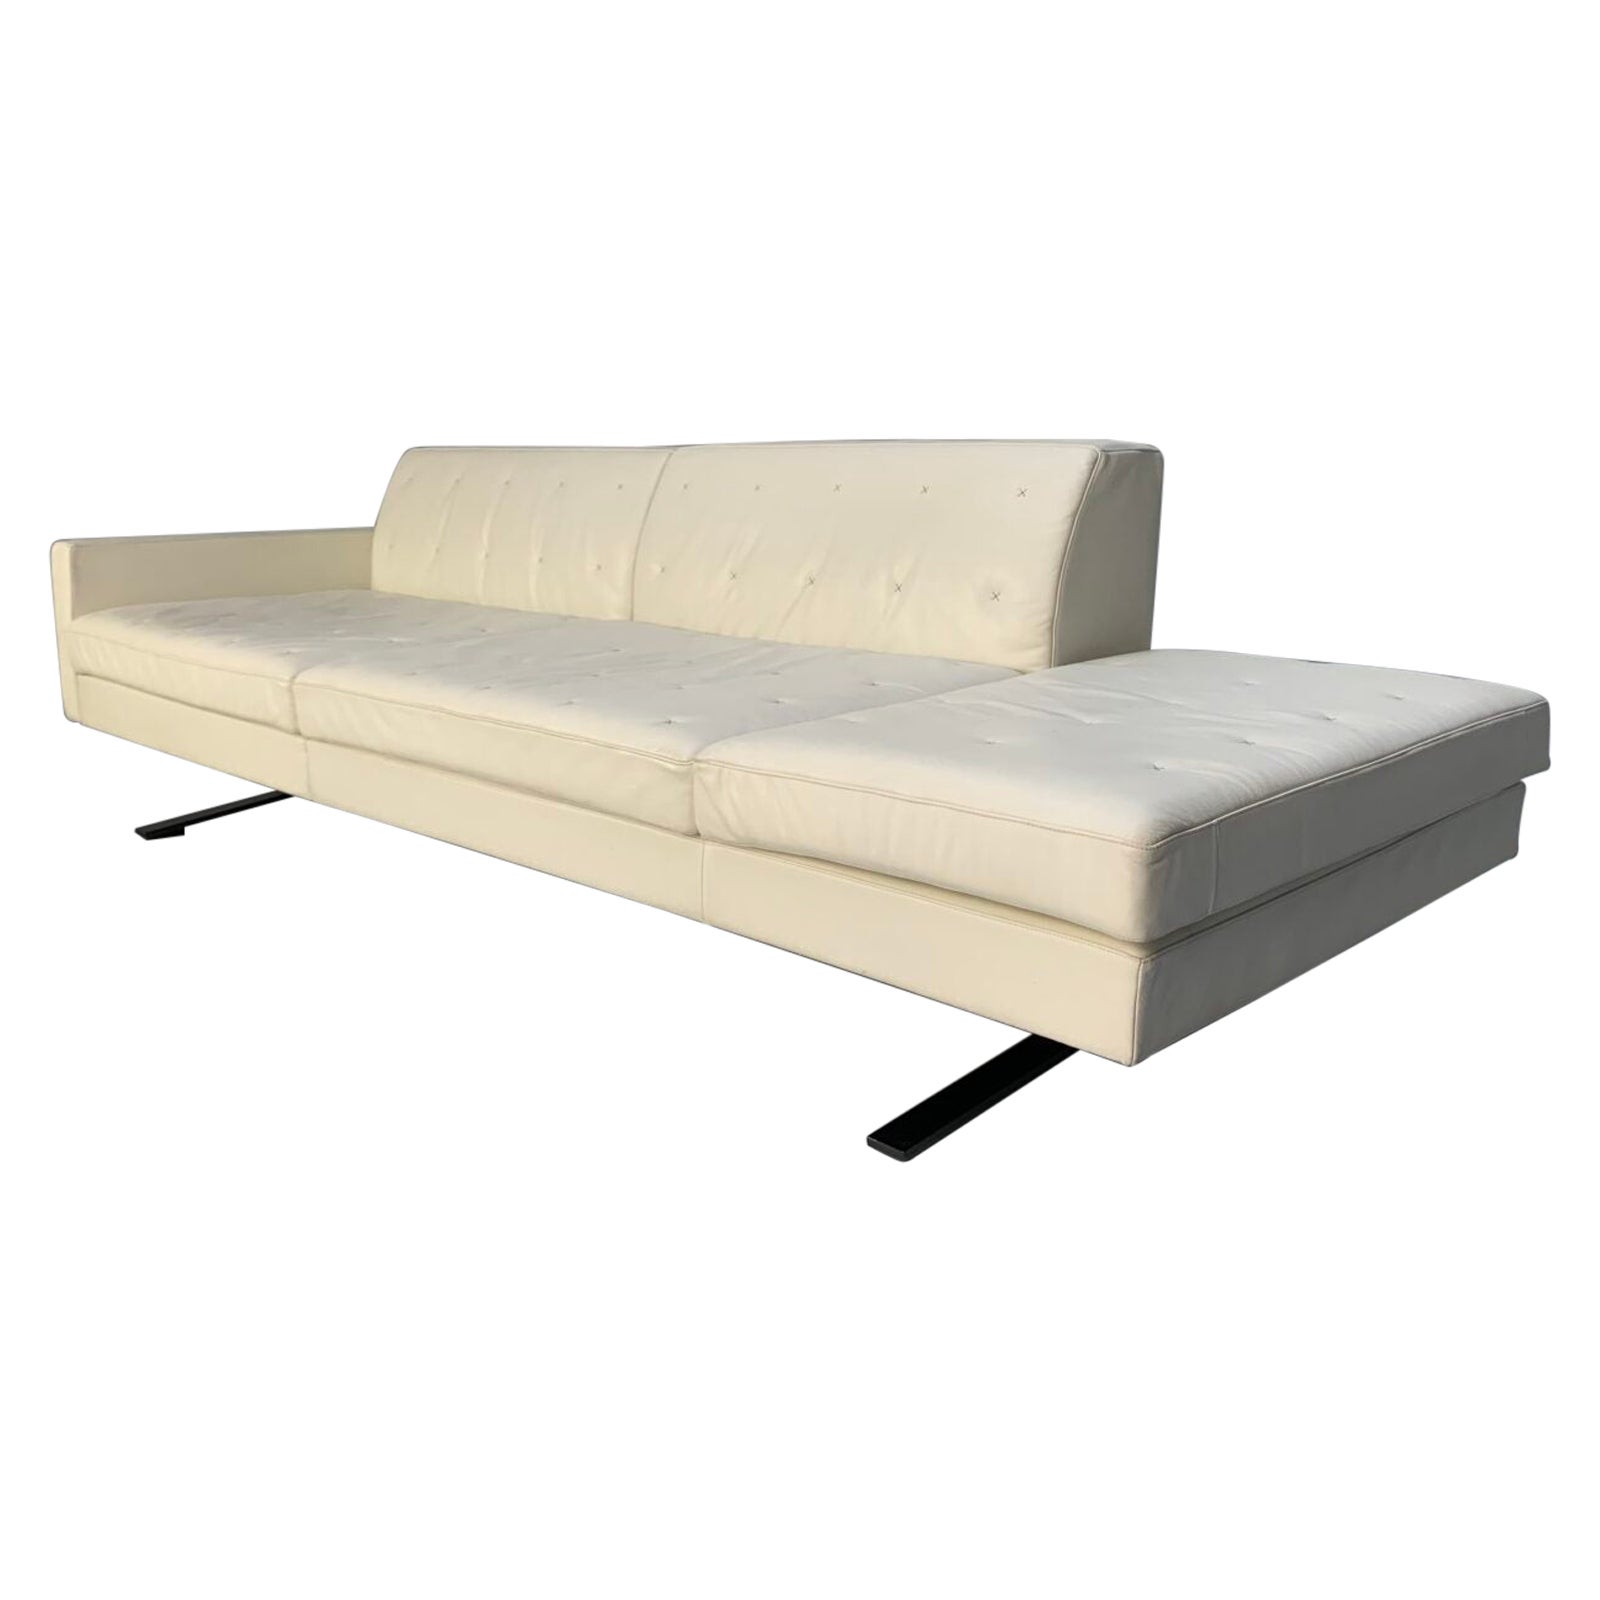 Poltrona Frau “Kennedee” 3-Seat Sofa – In Ivory “Pelle Frau” Leather